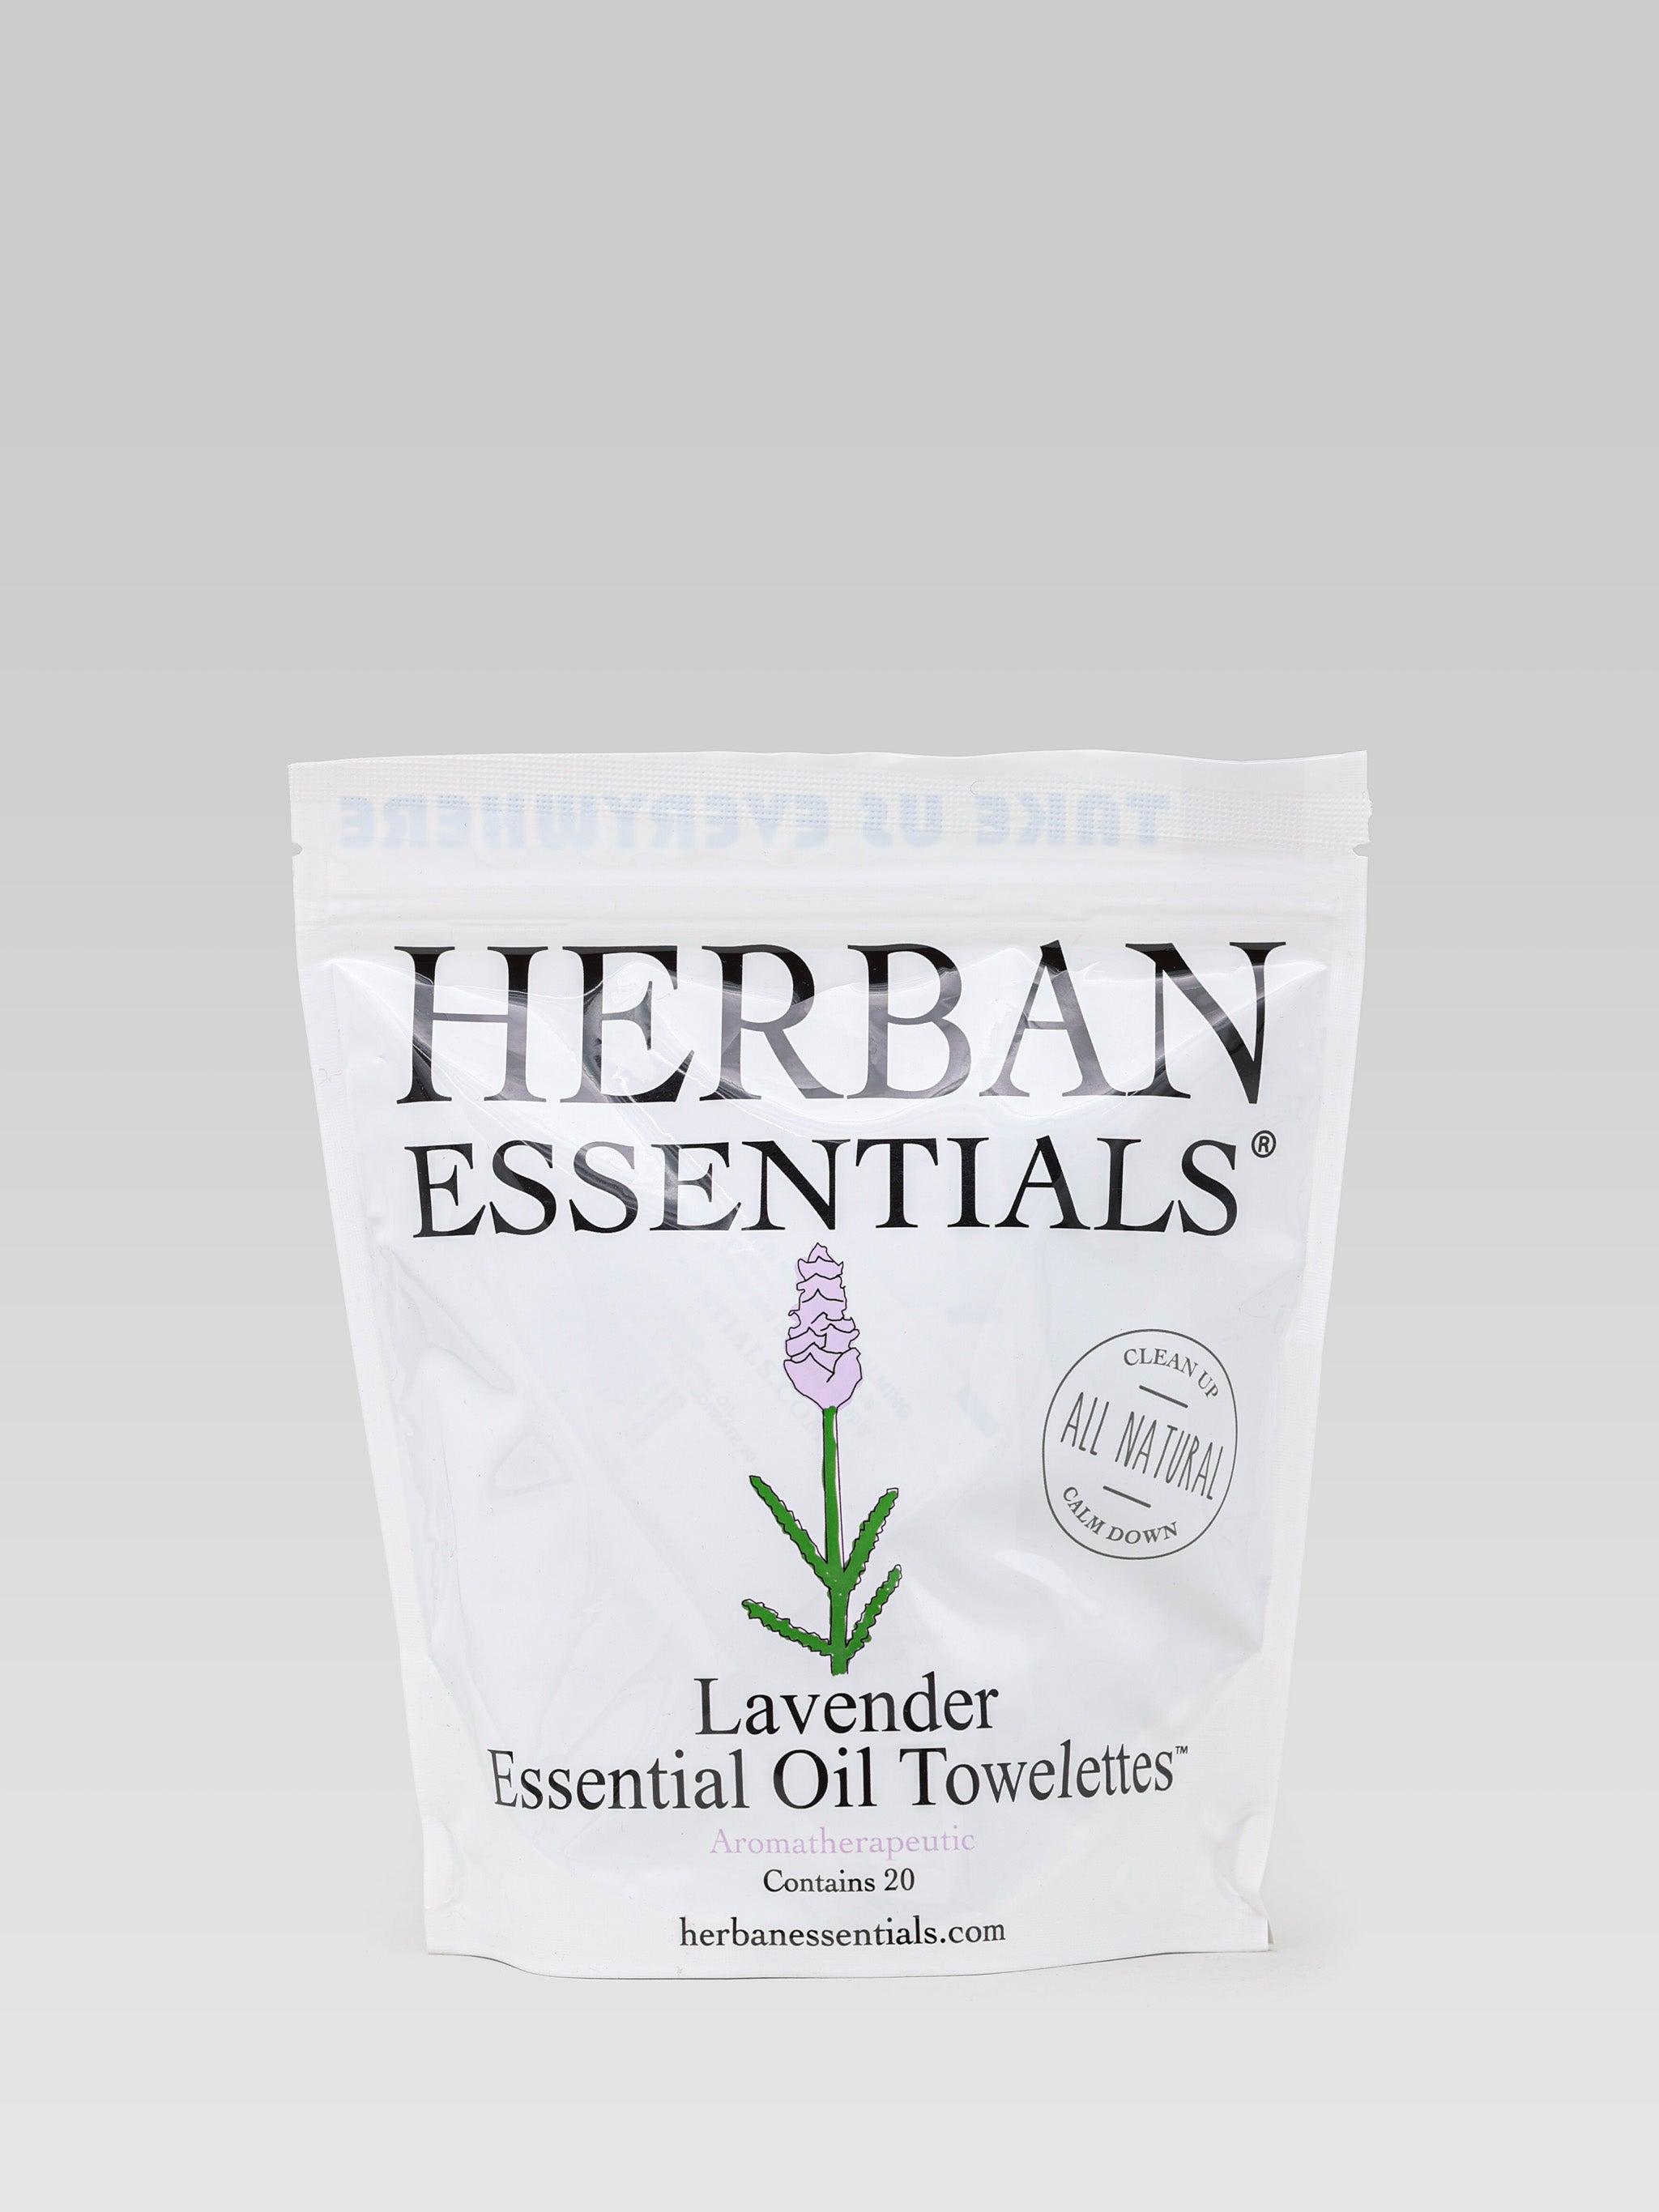 HERBAN ESSENTIALS Lavender Essential Oil Towelettes product shot